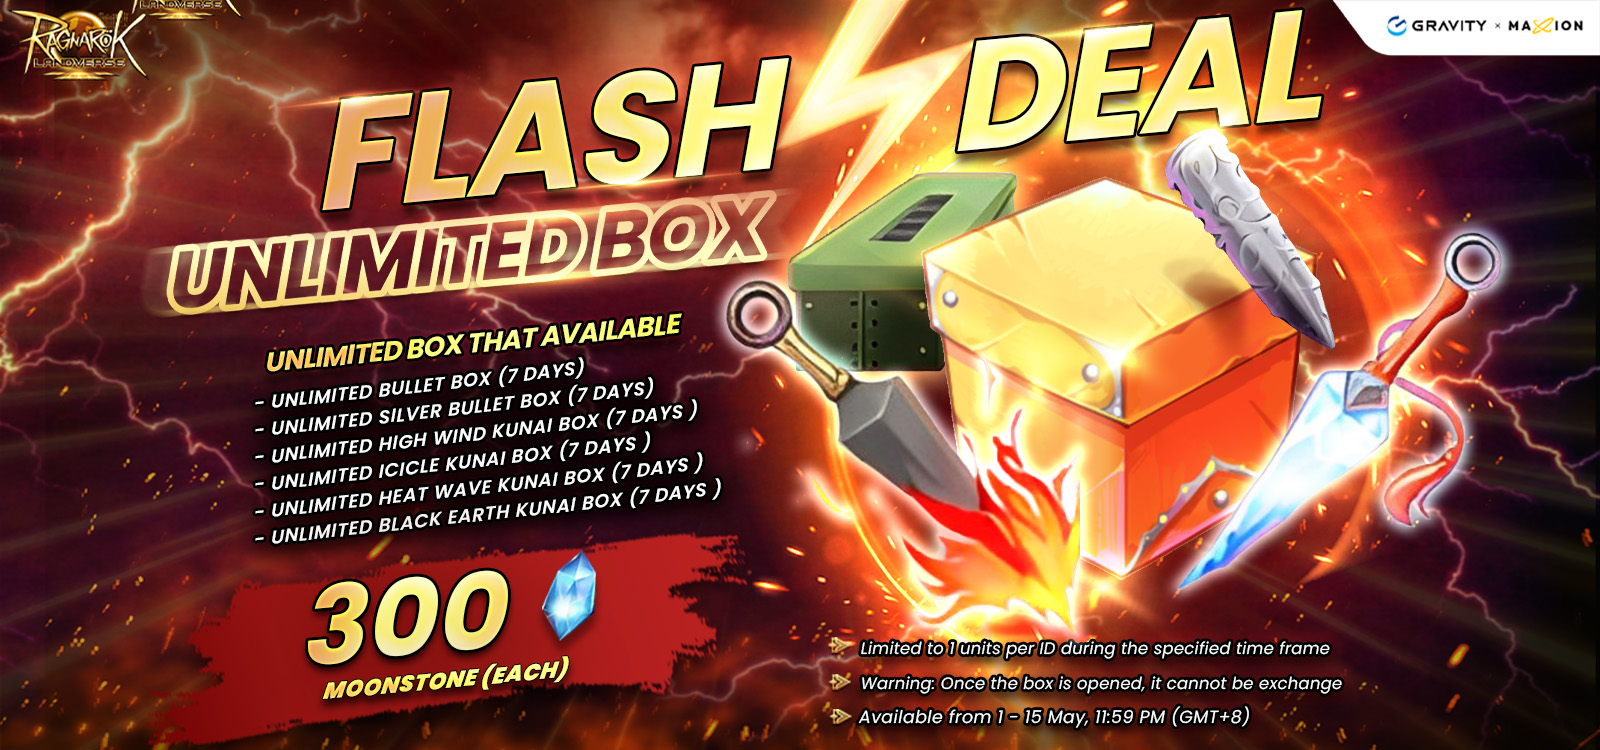 Ragnarok Landverse FLASH DEAL Unlimited box